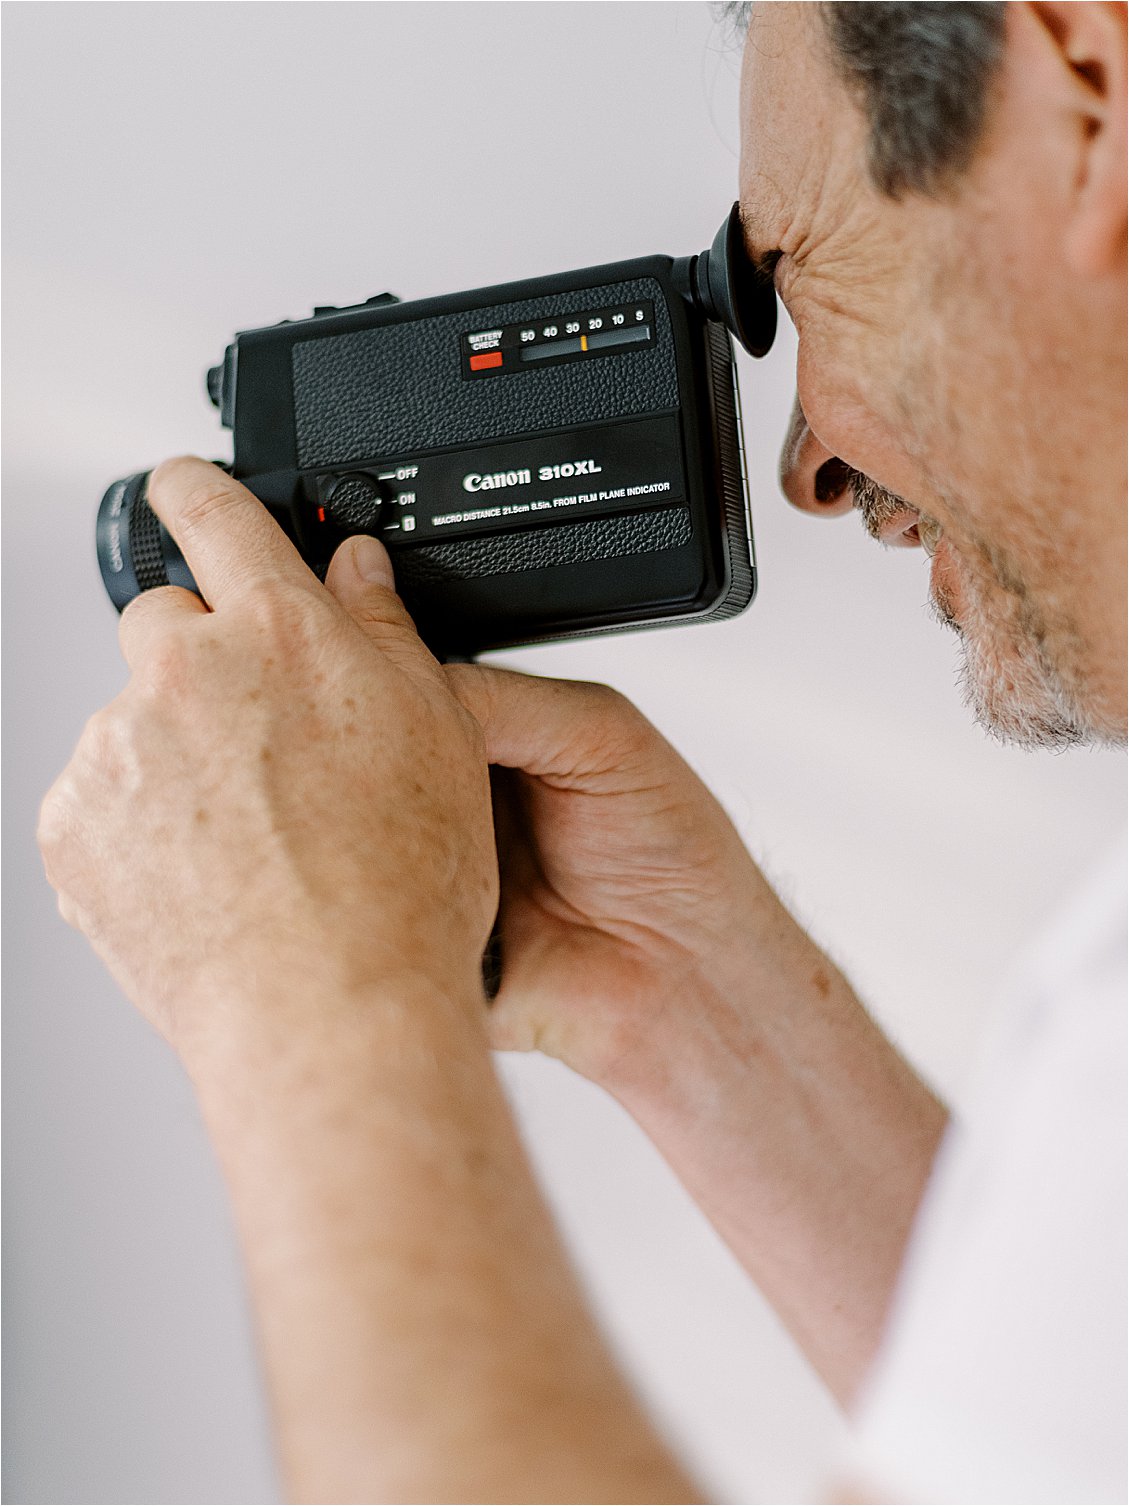 Super 8 camera on film with film photgrapher Renee Hollingshead